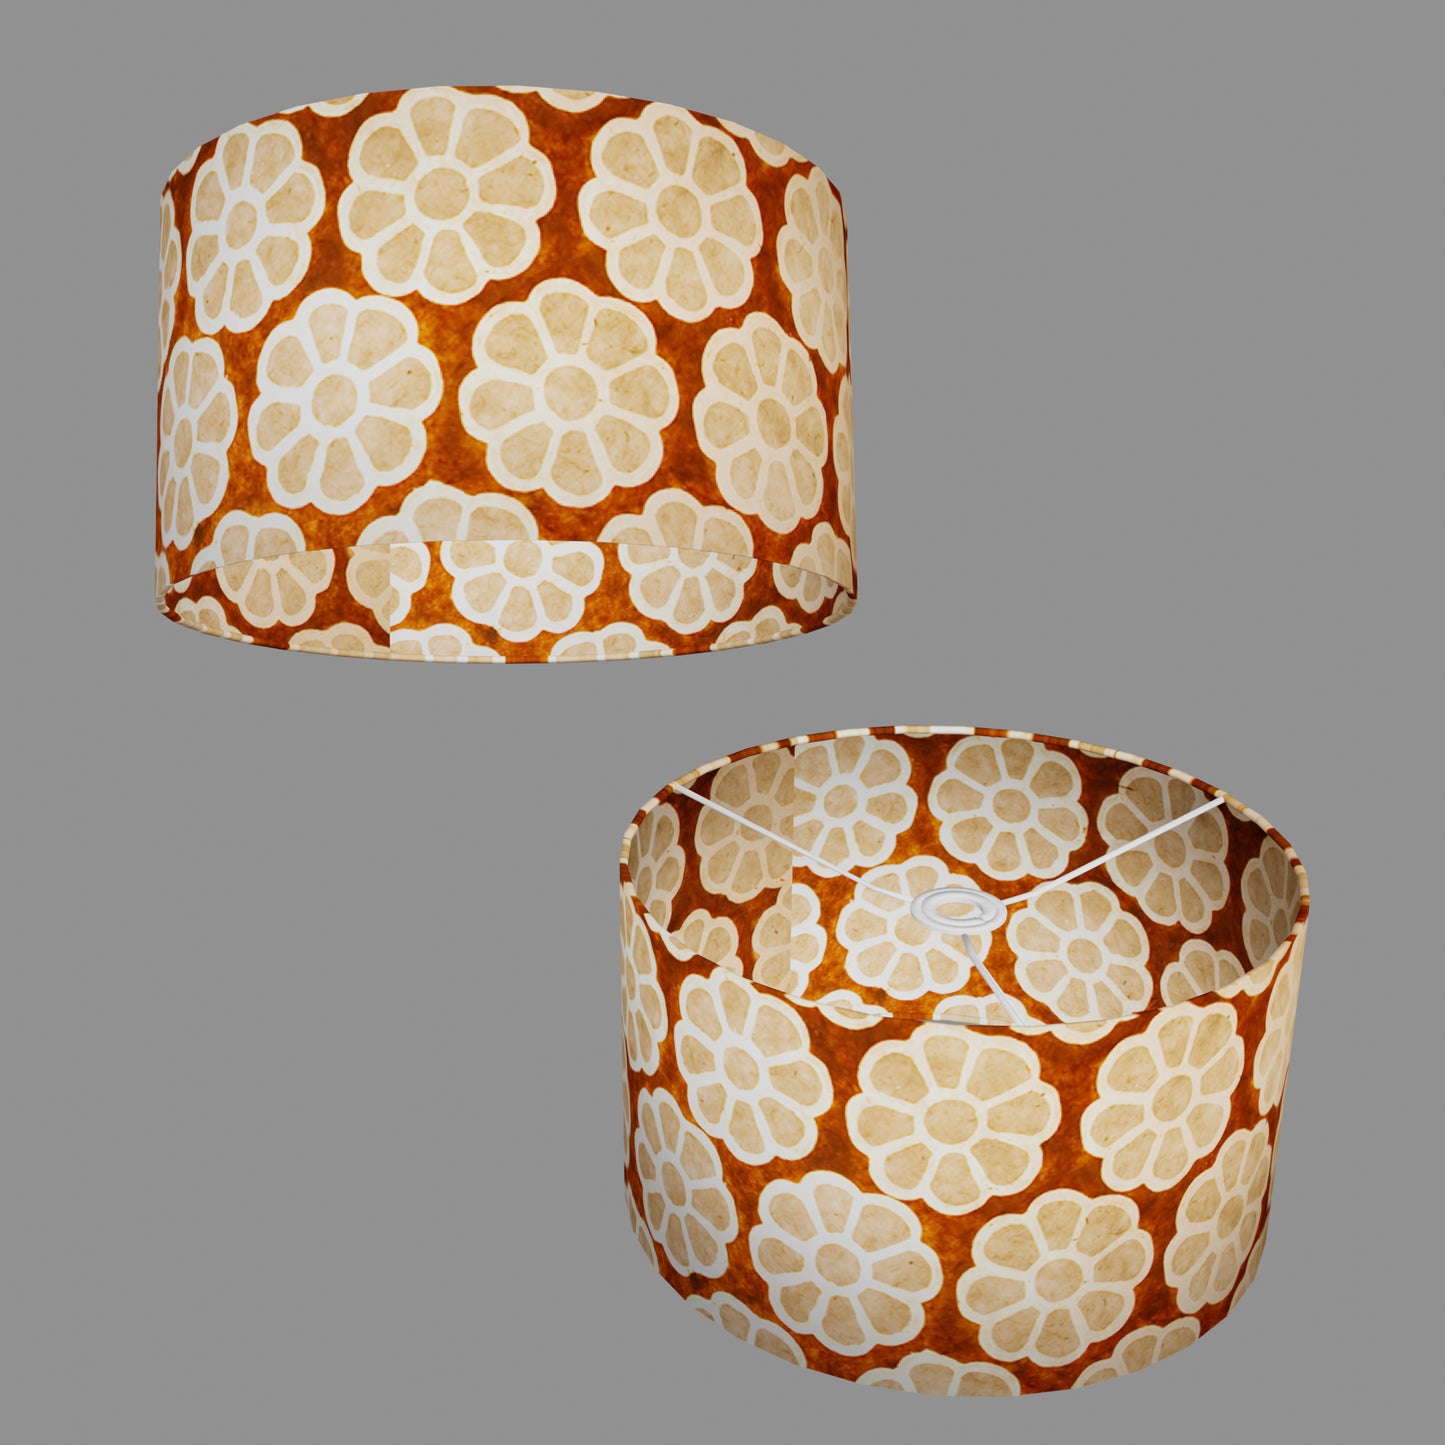 Drum Lamp Shade - P20 - Batik Big Flower on Brown, 35cm(d) x 20cm(h)